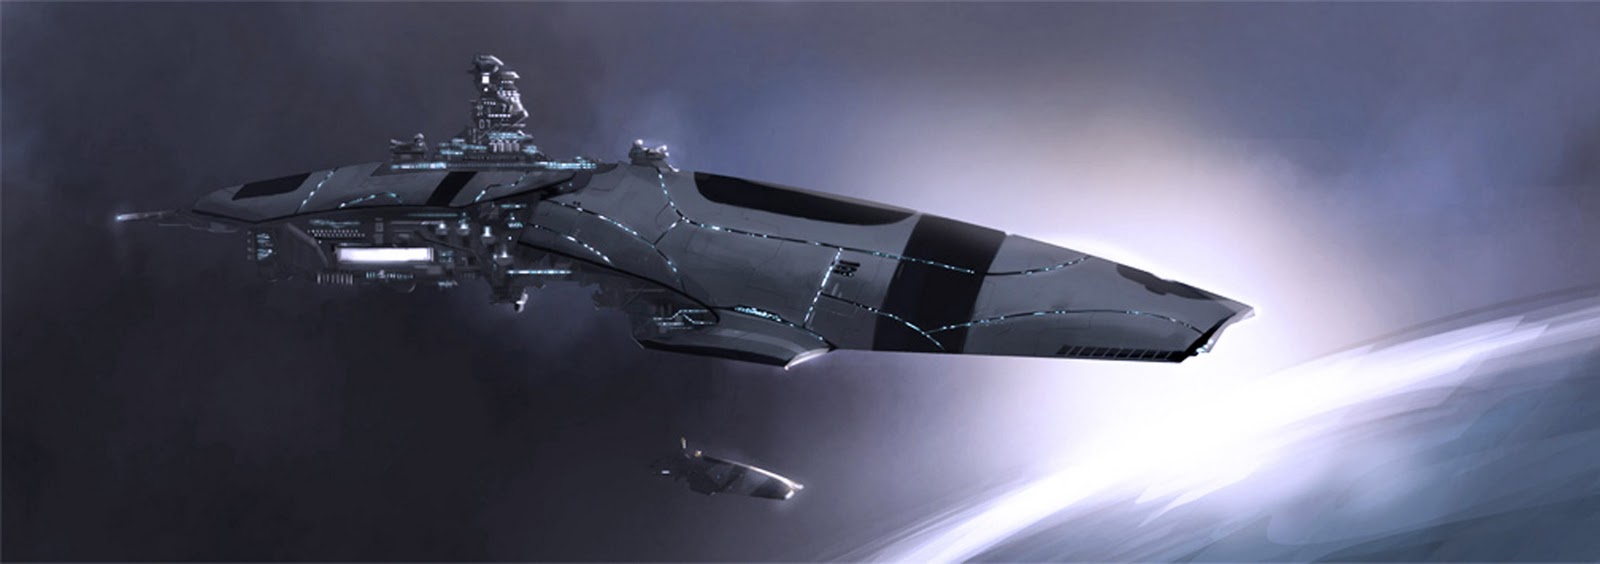 eve+online+sci+fi+space+ship+cruiser+armada+dropship+battle+cruiser+warship+spacecraft+star+trek+star+wars+hyper+jet++dsng.jpg